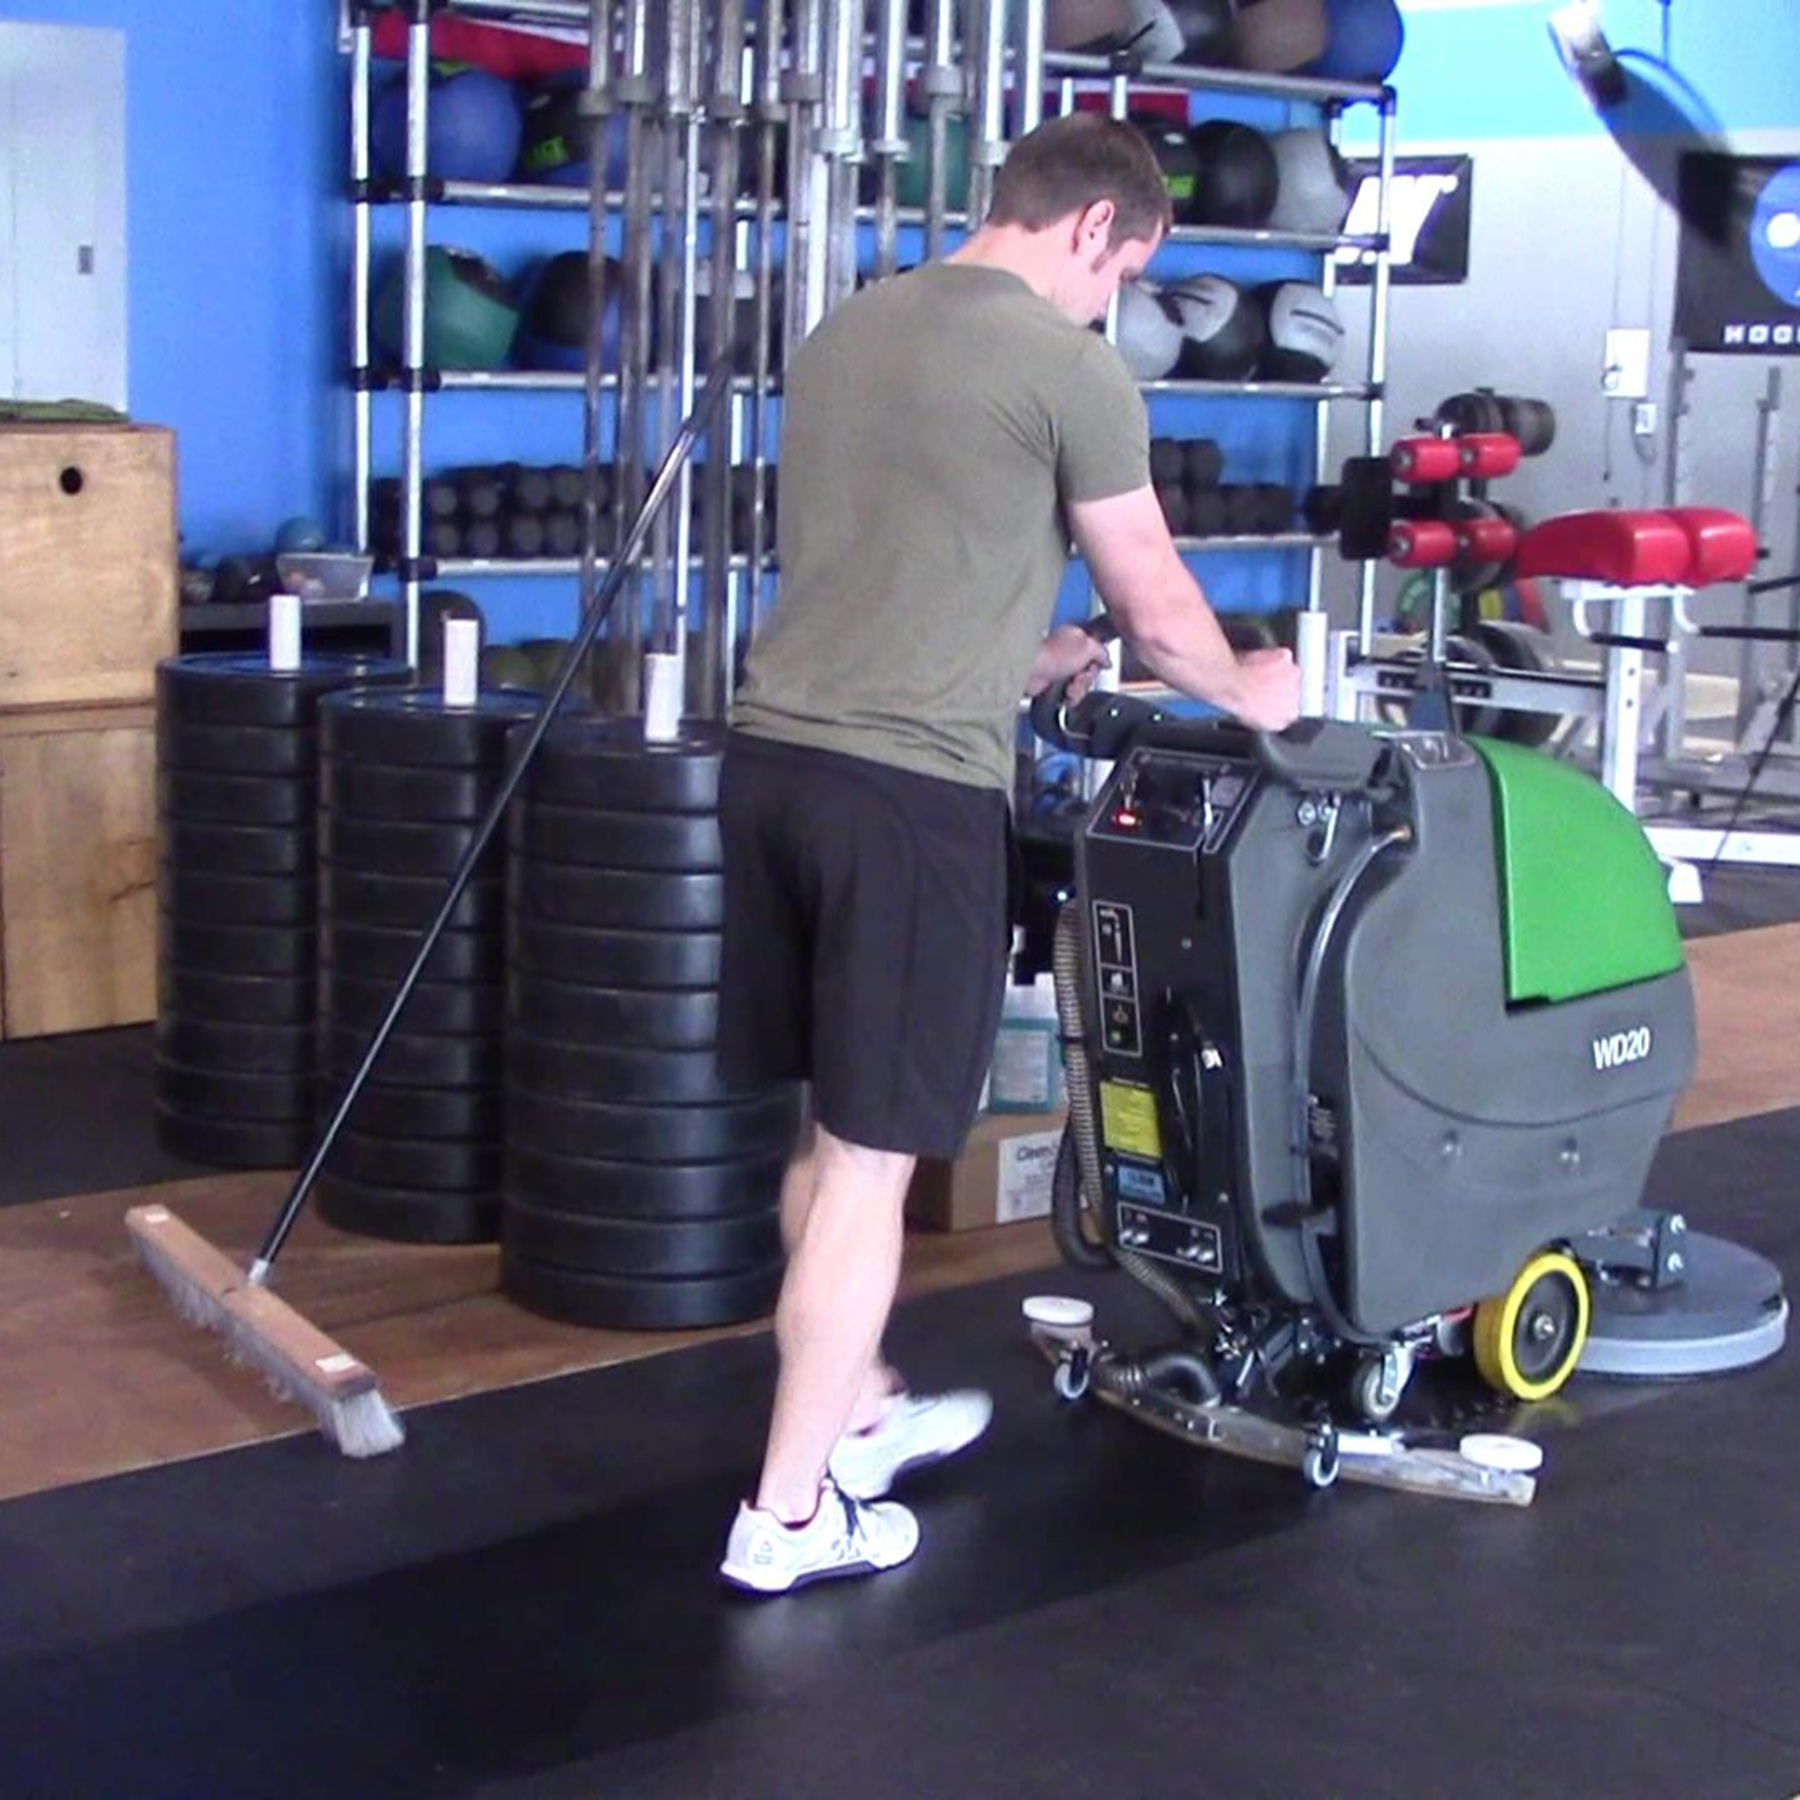 Gym Floor Cleaning Machine  Bulldog Rubber Mat Scrubber